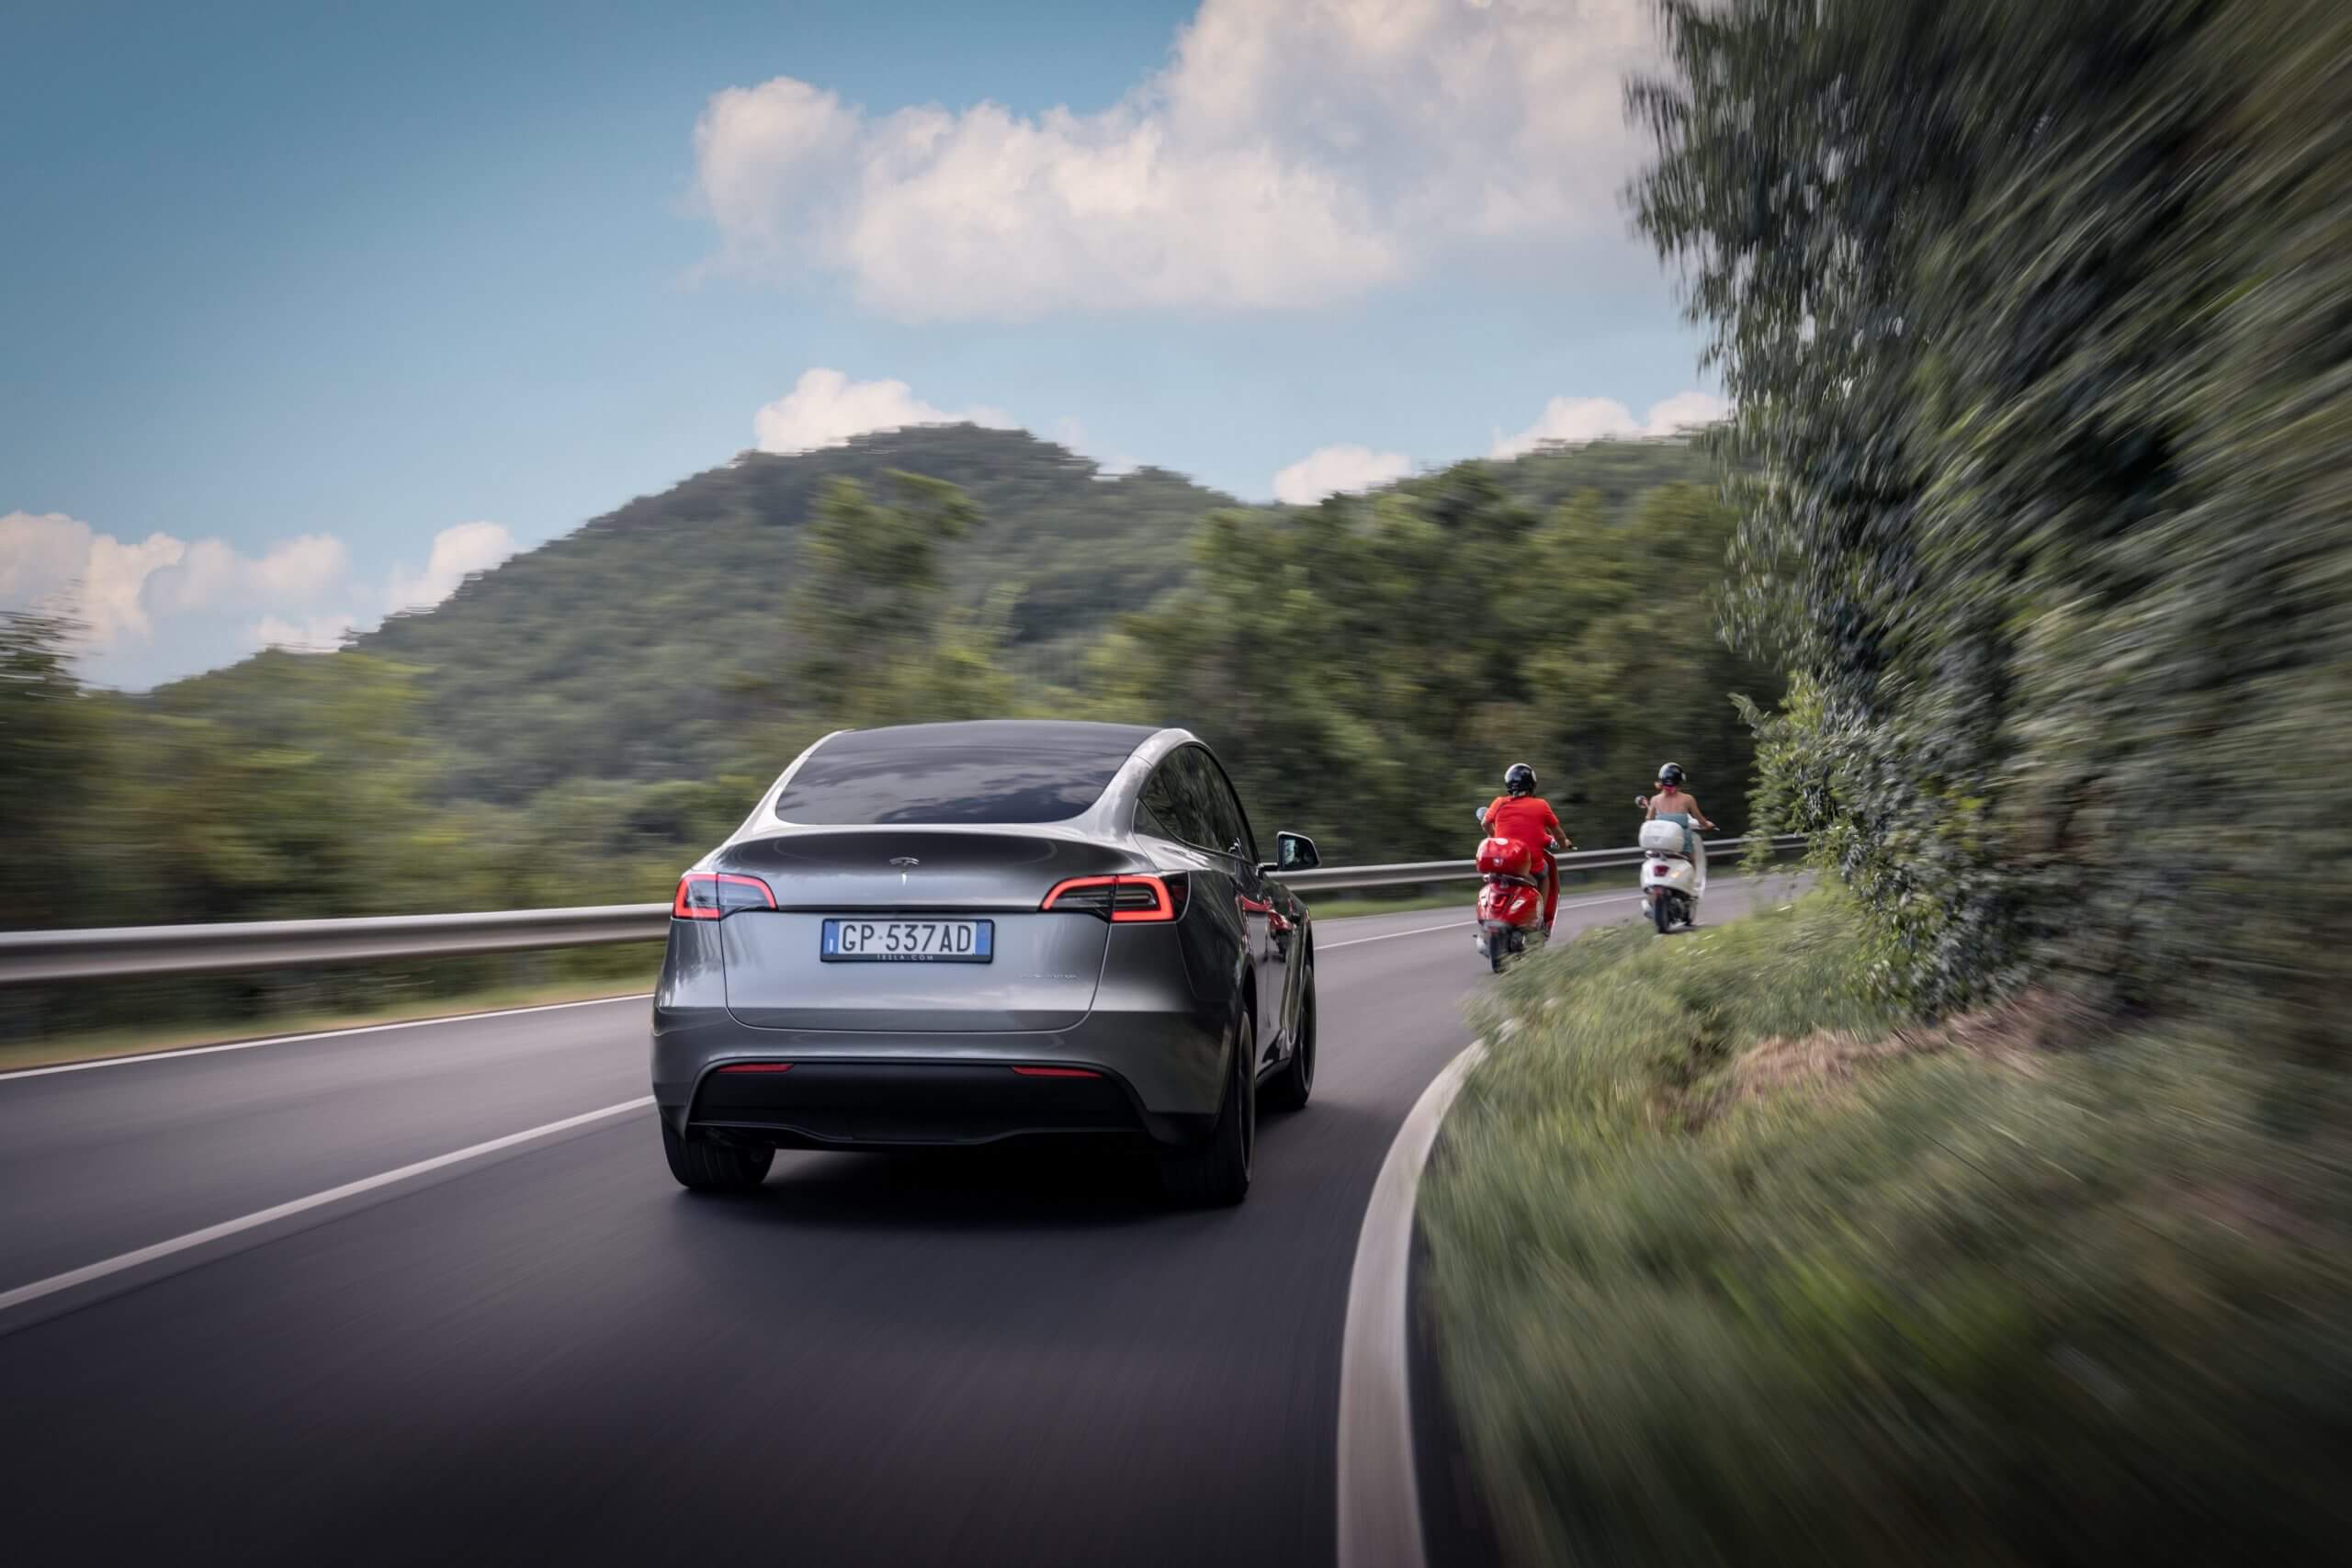 Потенциал Tesla Full Self-Driving (FSD) признан аналитиком РБК Капитал